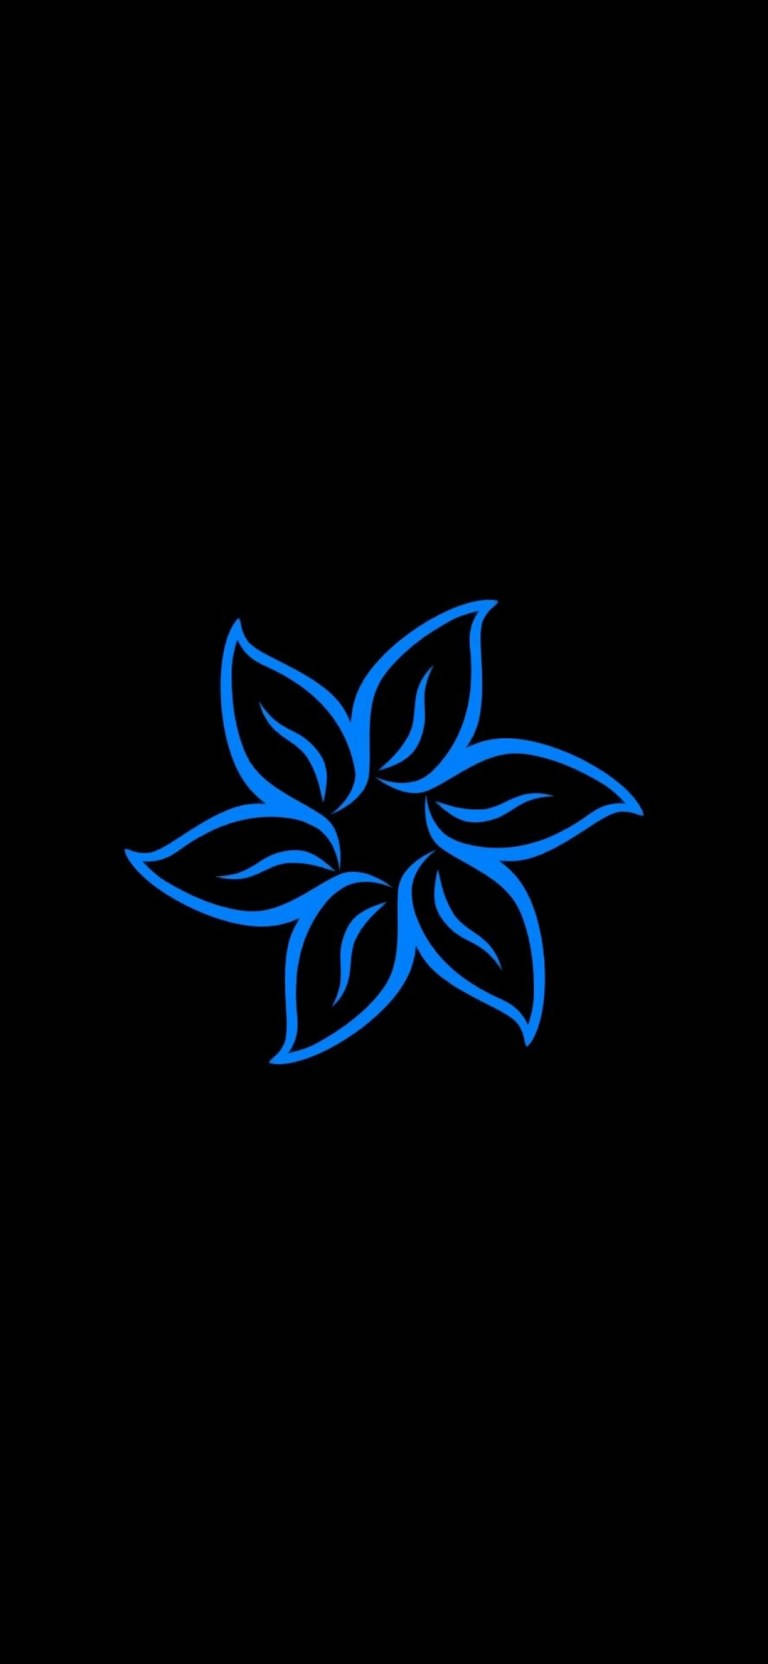 Stunning Blue Flower Oled Display Aesthetic